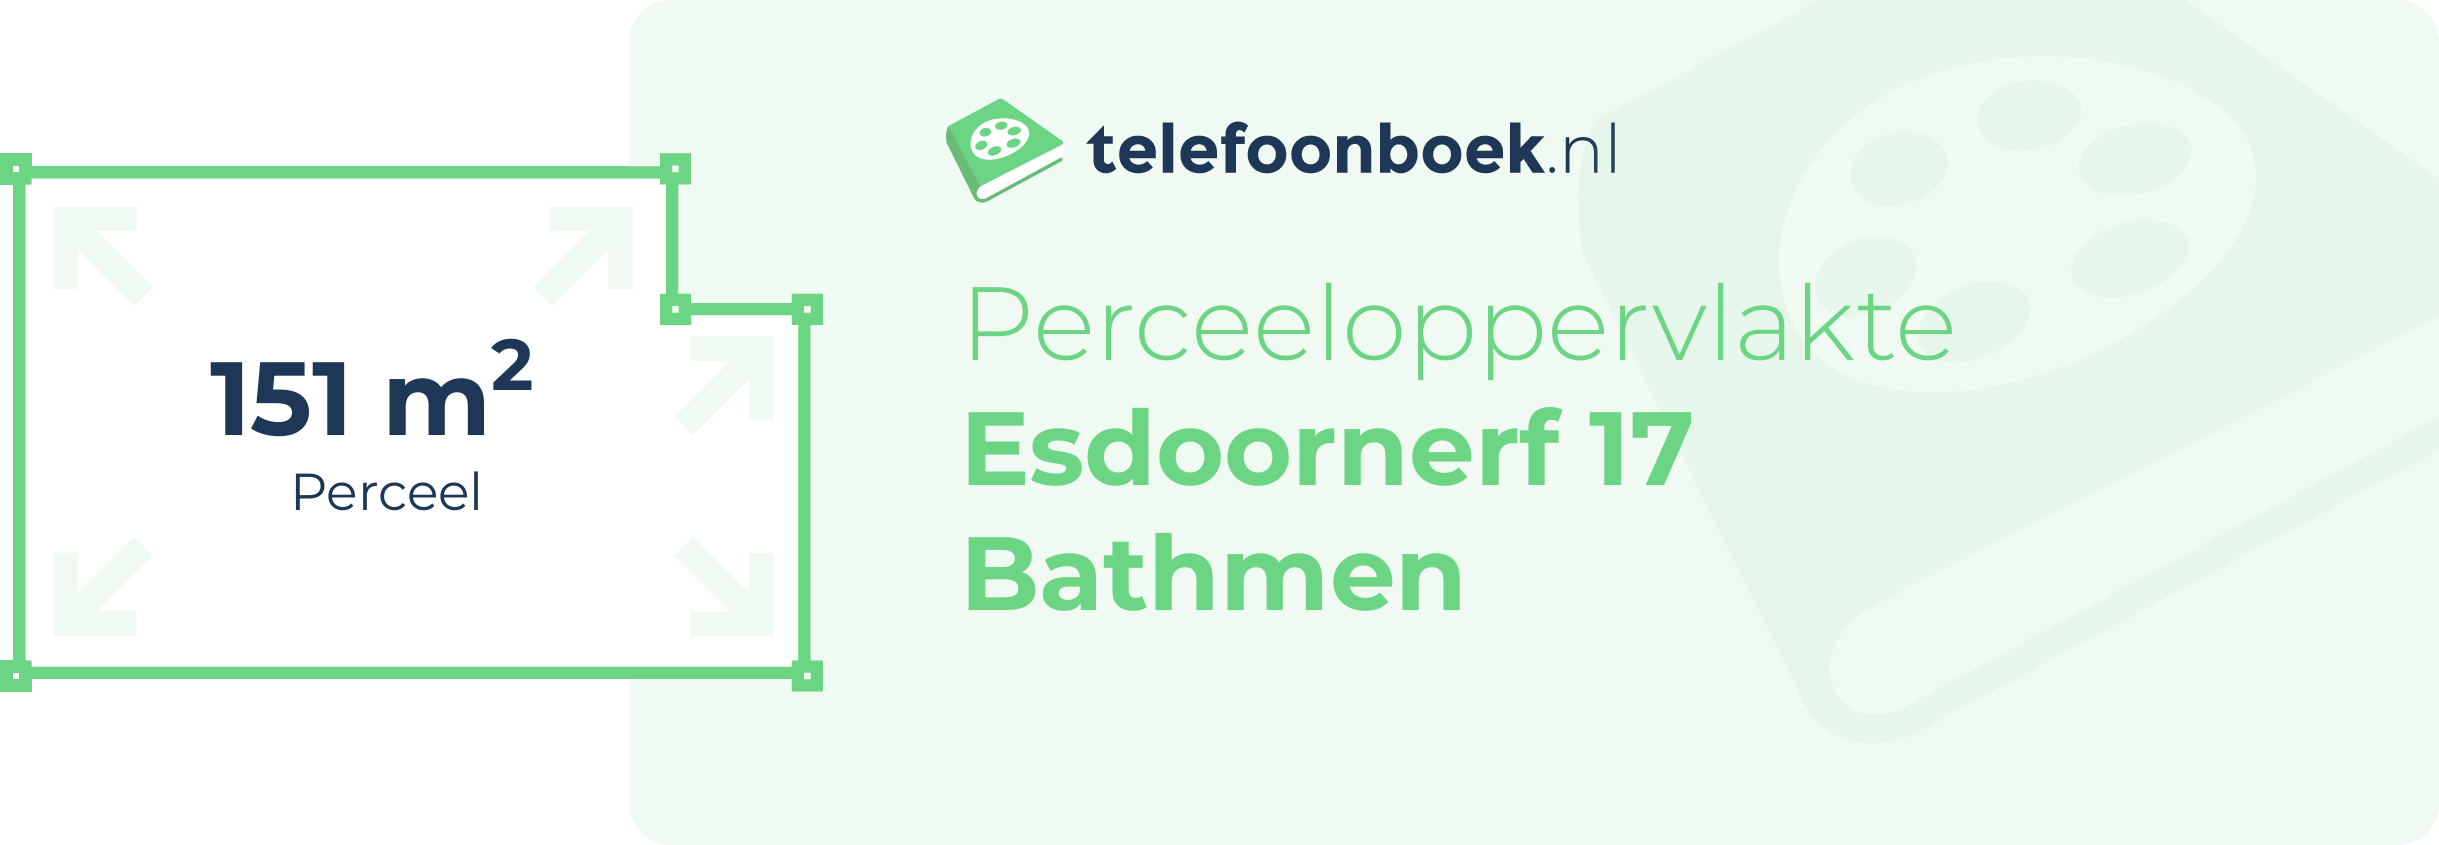 Perceeloppervlakte Esdoornerf 17 Bathmen